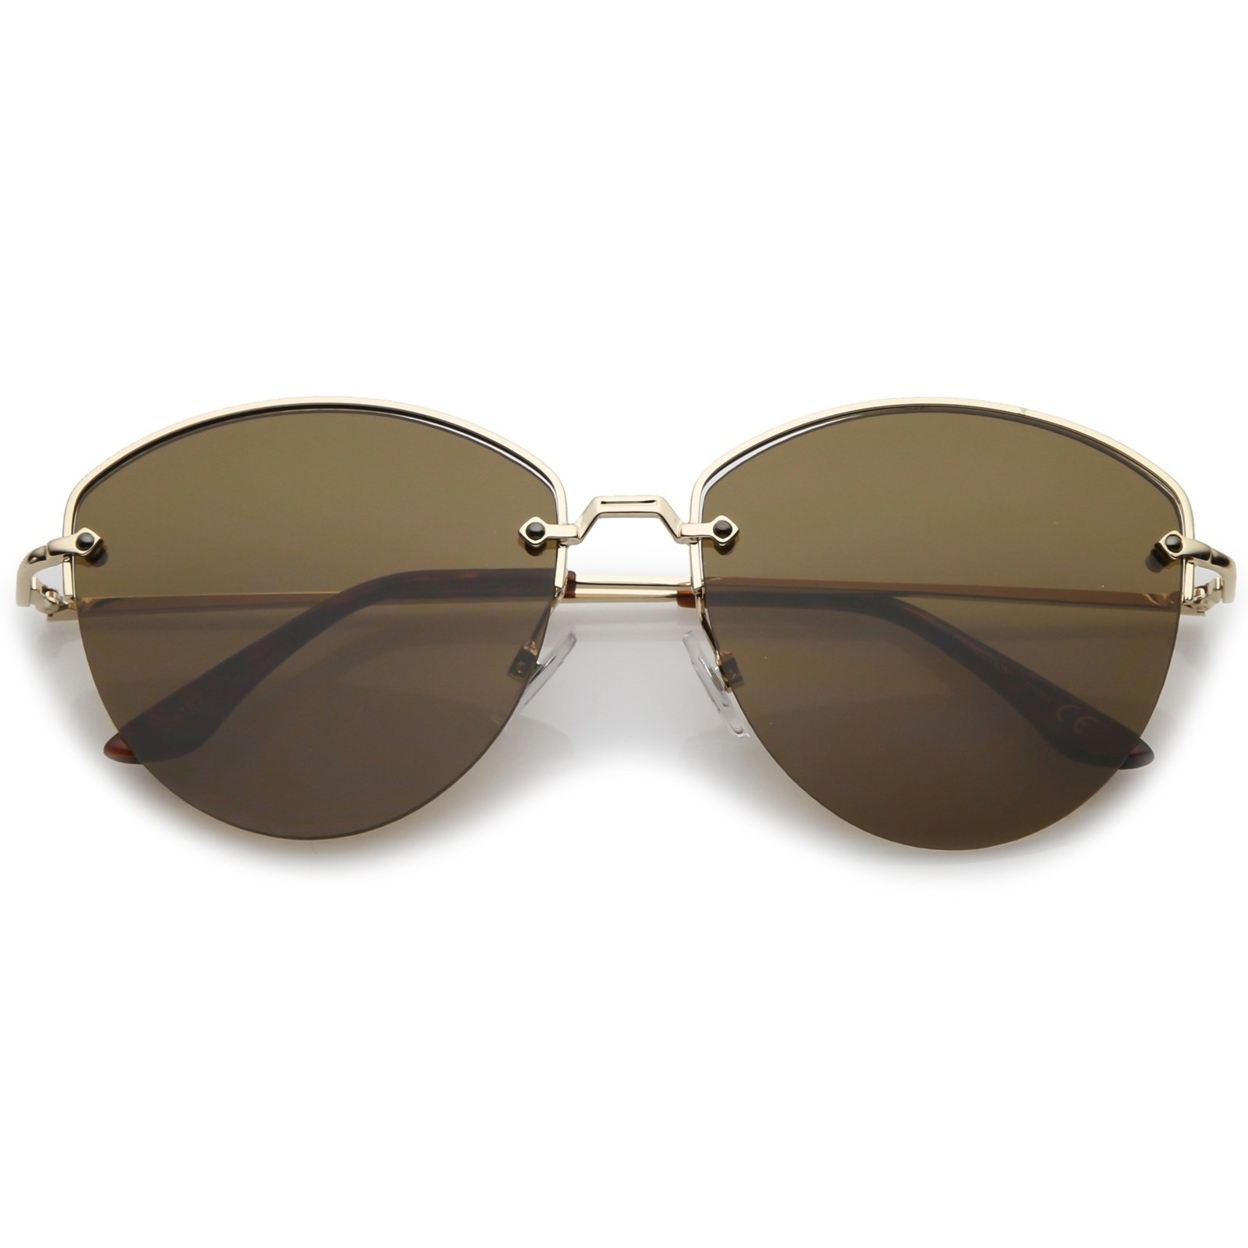 Modern Metal Nose Bridge Flat Lens Semi-Rimless Sunglasses 60mm - Silver / Smoke